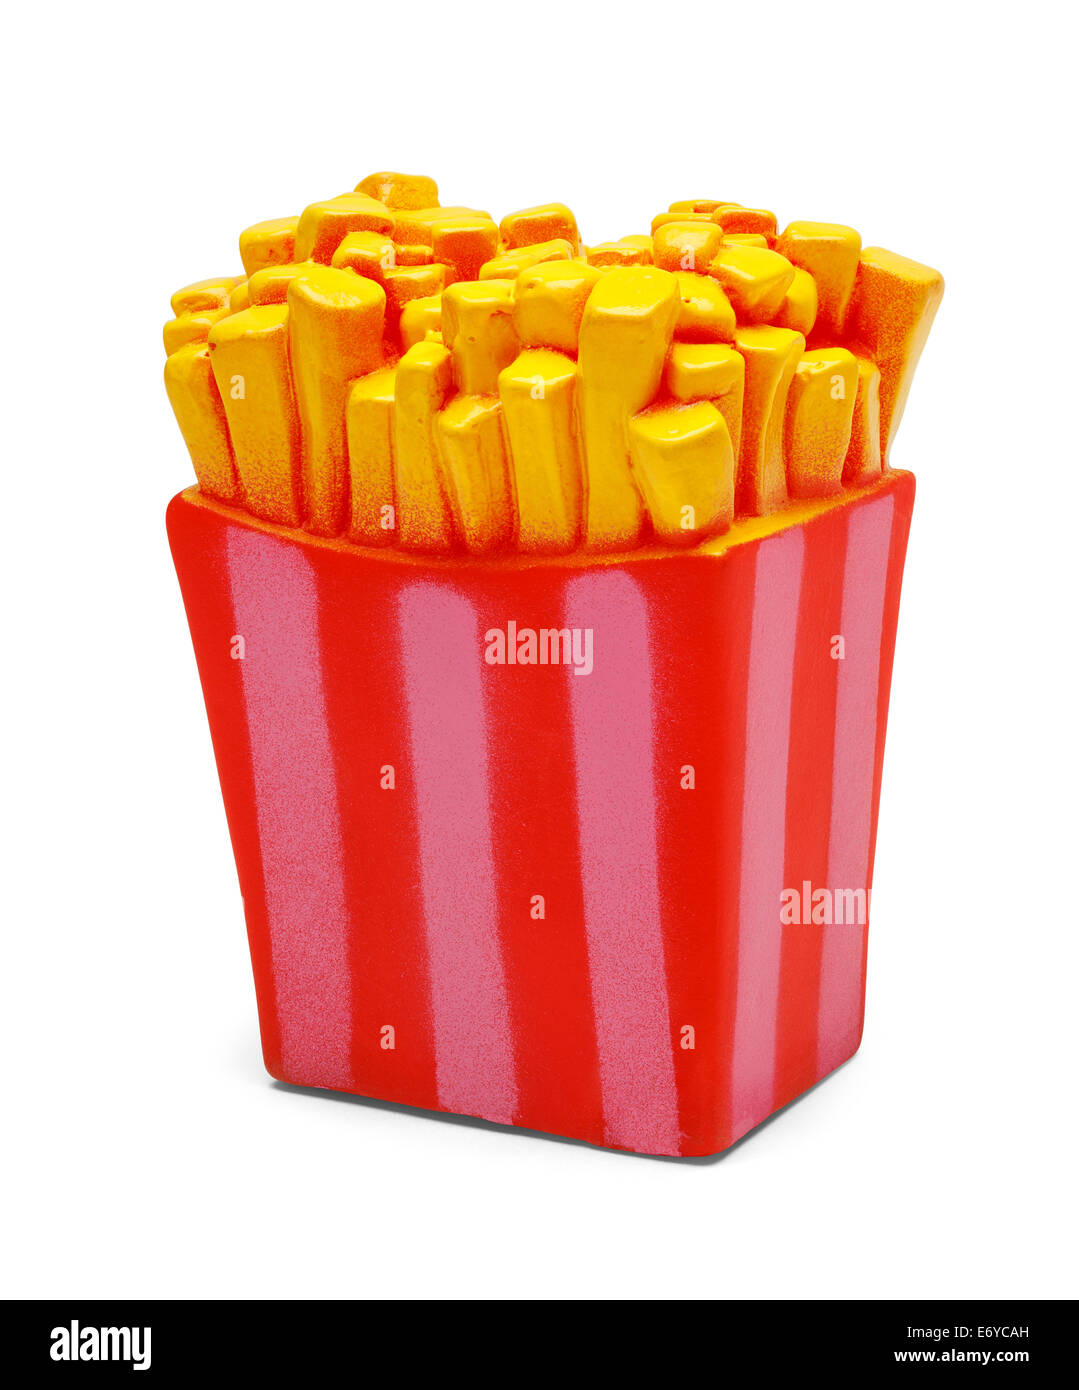 Kautschuk quietschend Spielzeug Pommes frites Isolated on White Background. Stockfoto